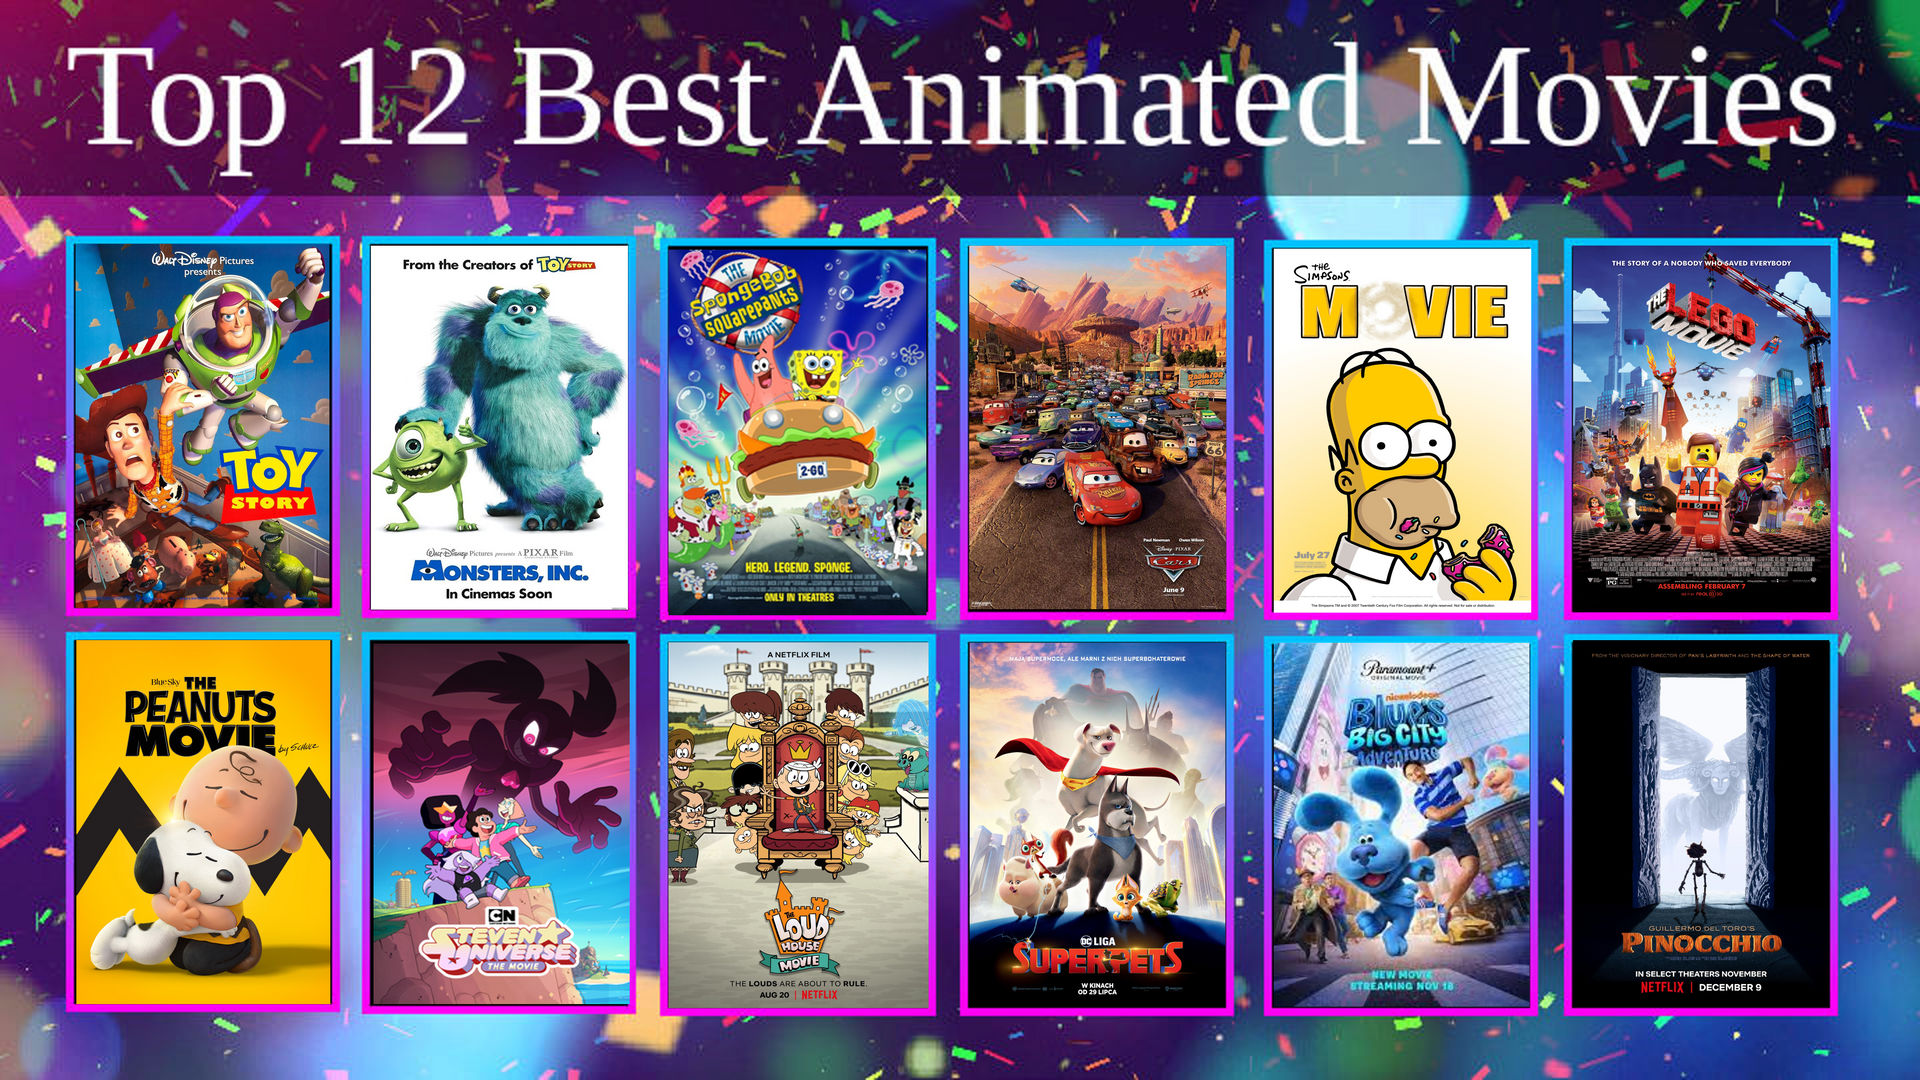 My Top 12 Best Animated Movies by PeytonAuz1999 on DeviantArt